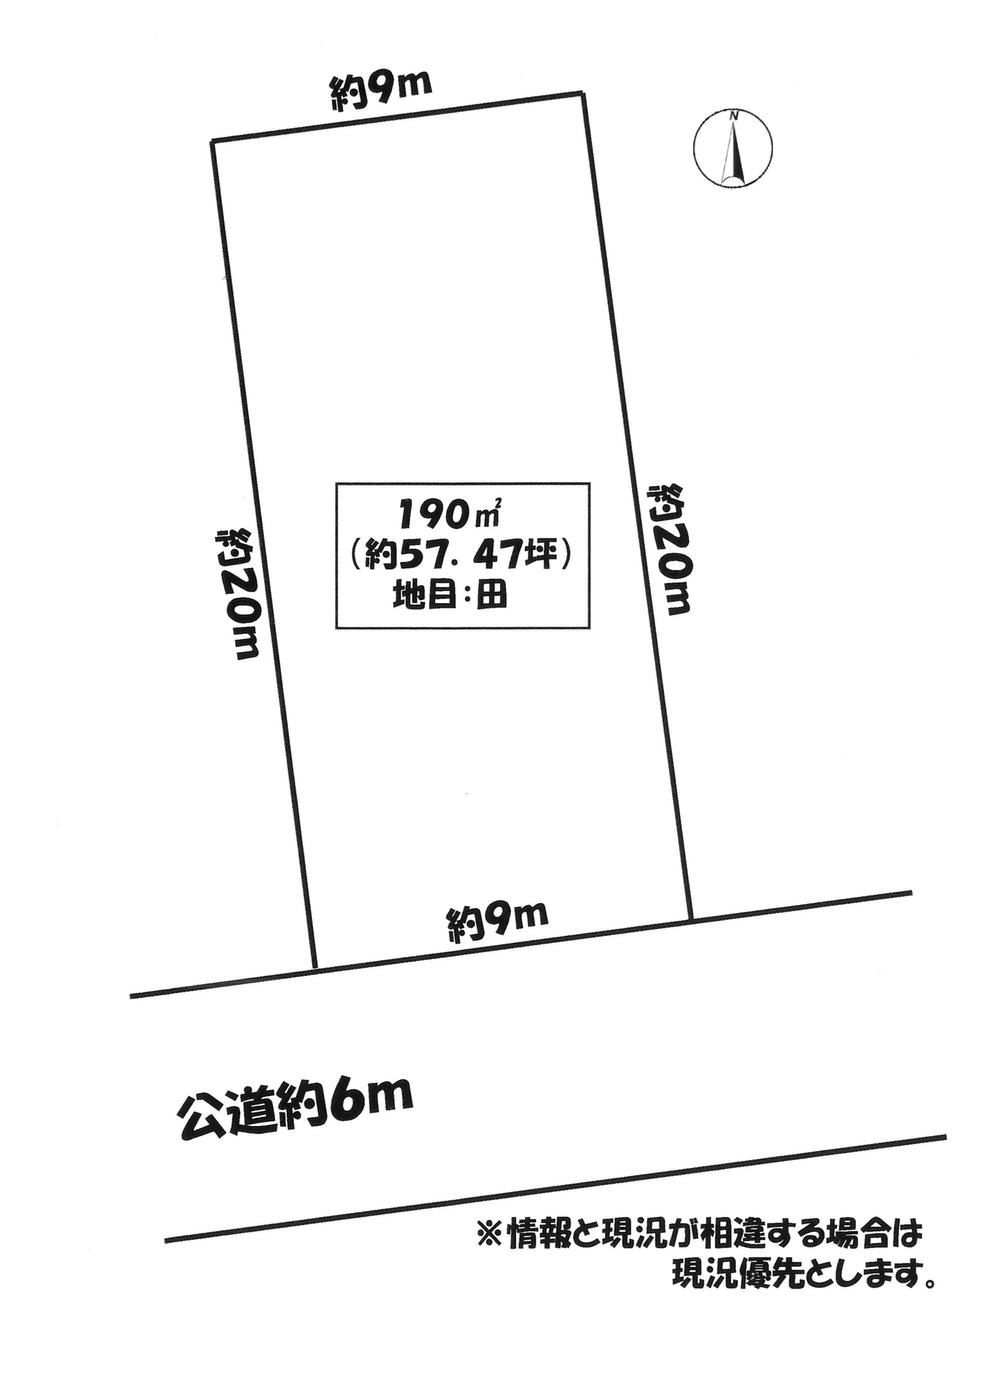 Compartment figure. Land price 17.8 million yen, Land area 190 sq m